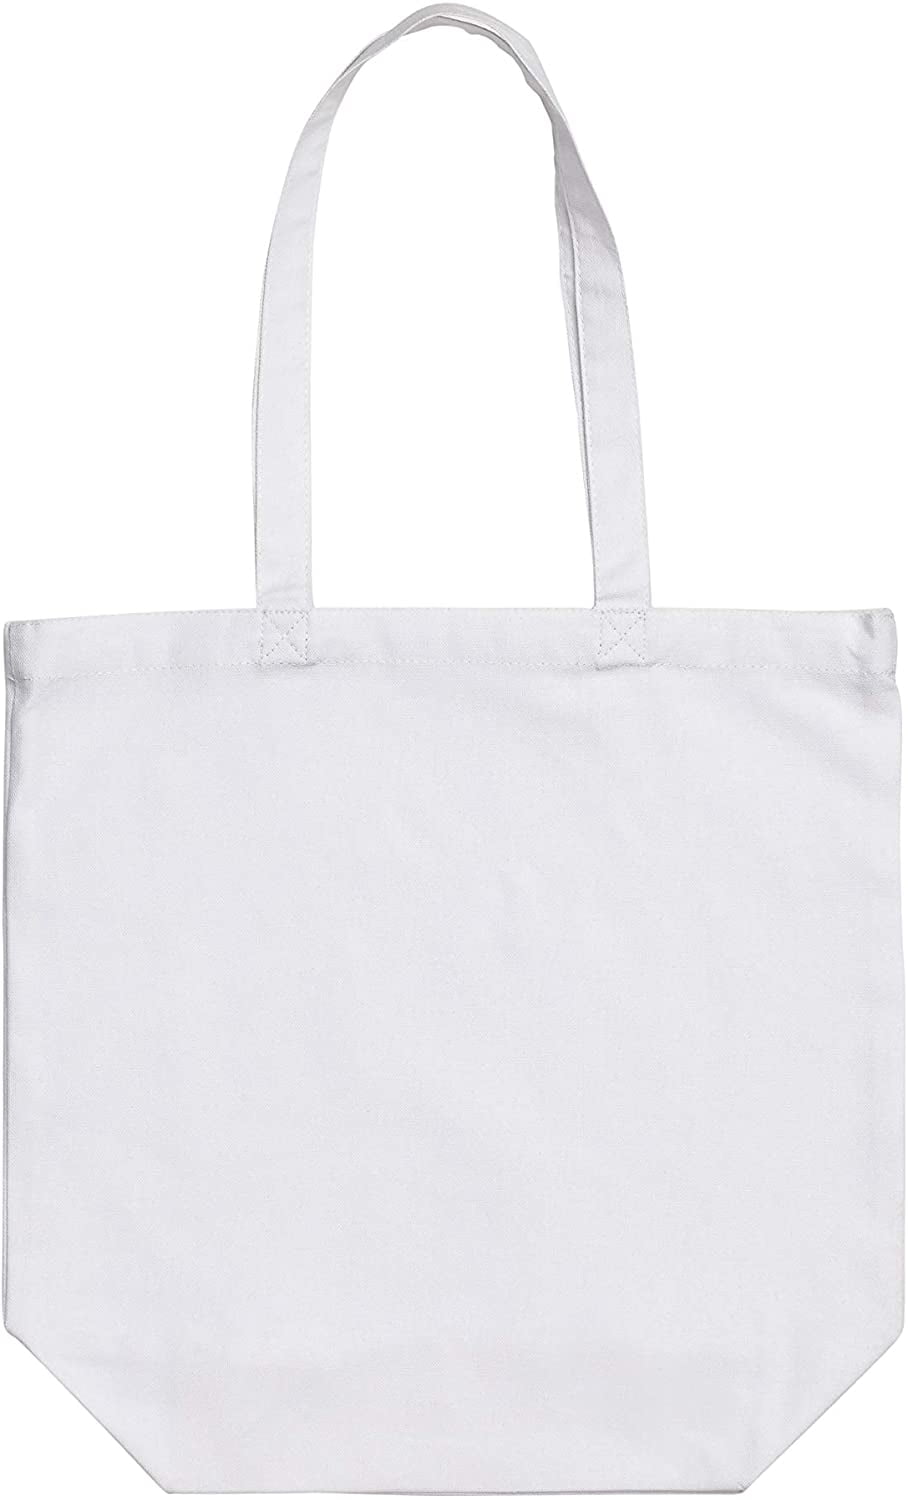 Creamy White Cotton Canvas Gift Bag Plain Shopping Shoulder Tote Shopper Bags 